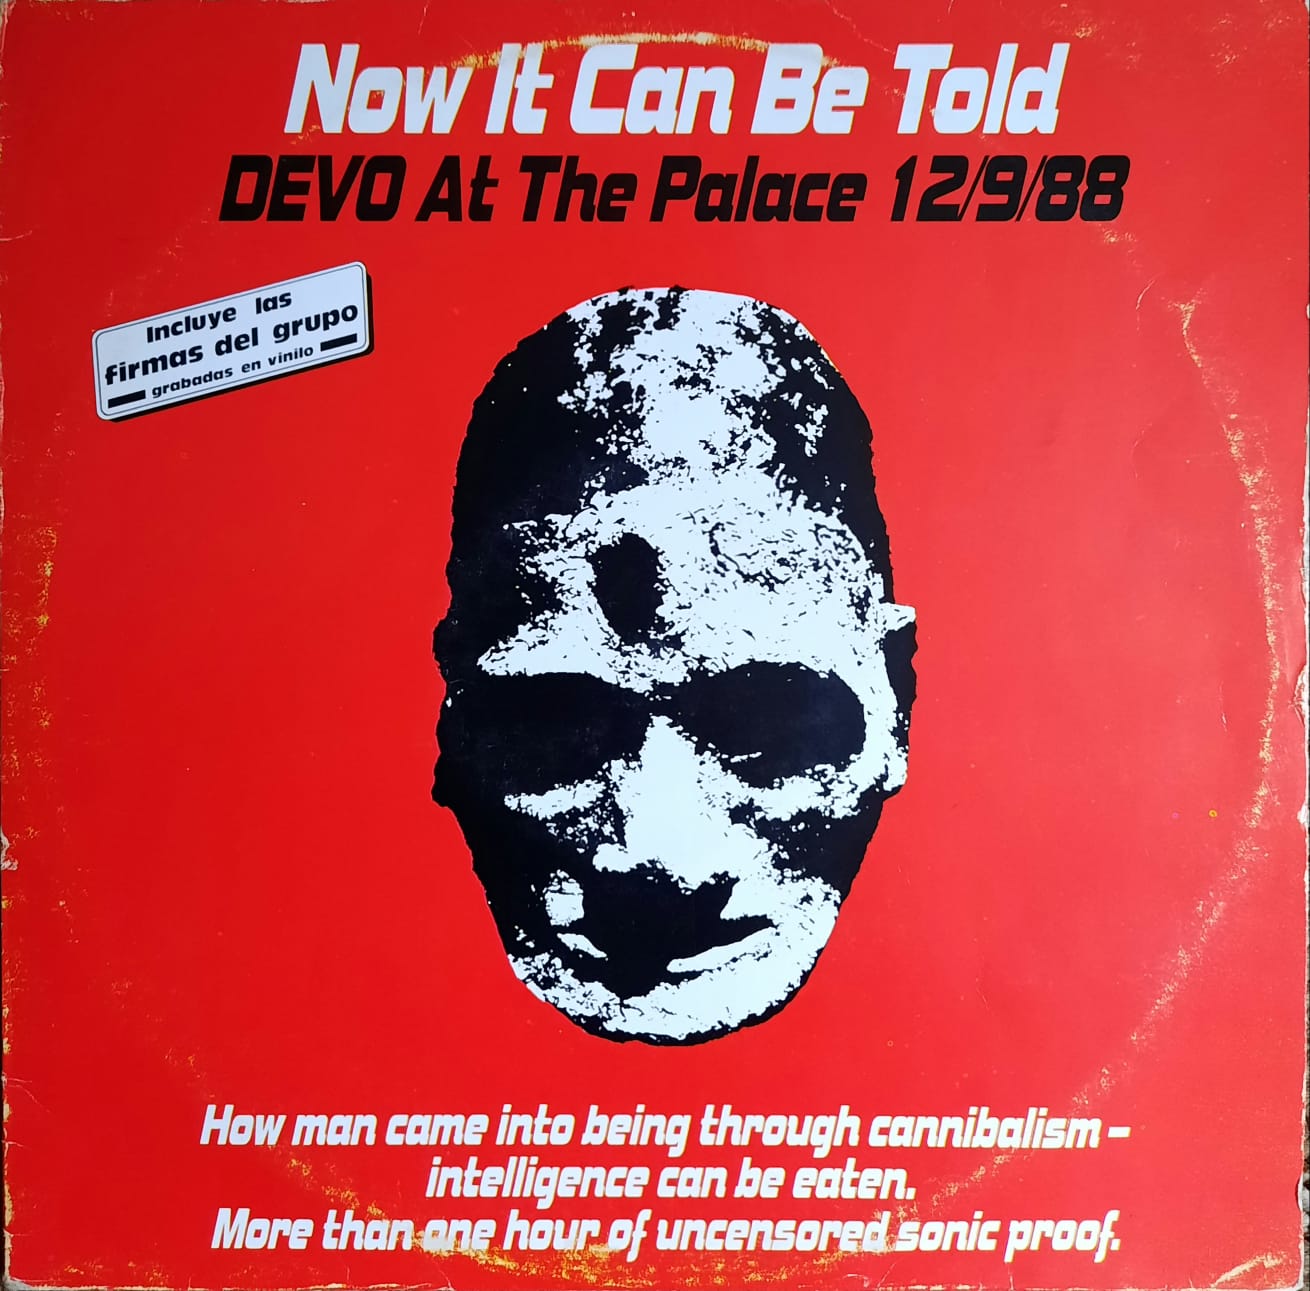 Devo - It Can Be Told, Devo At The Palace 12/9/88 (LP, España, 1989)